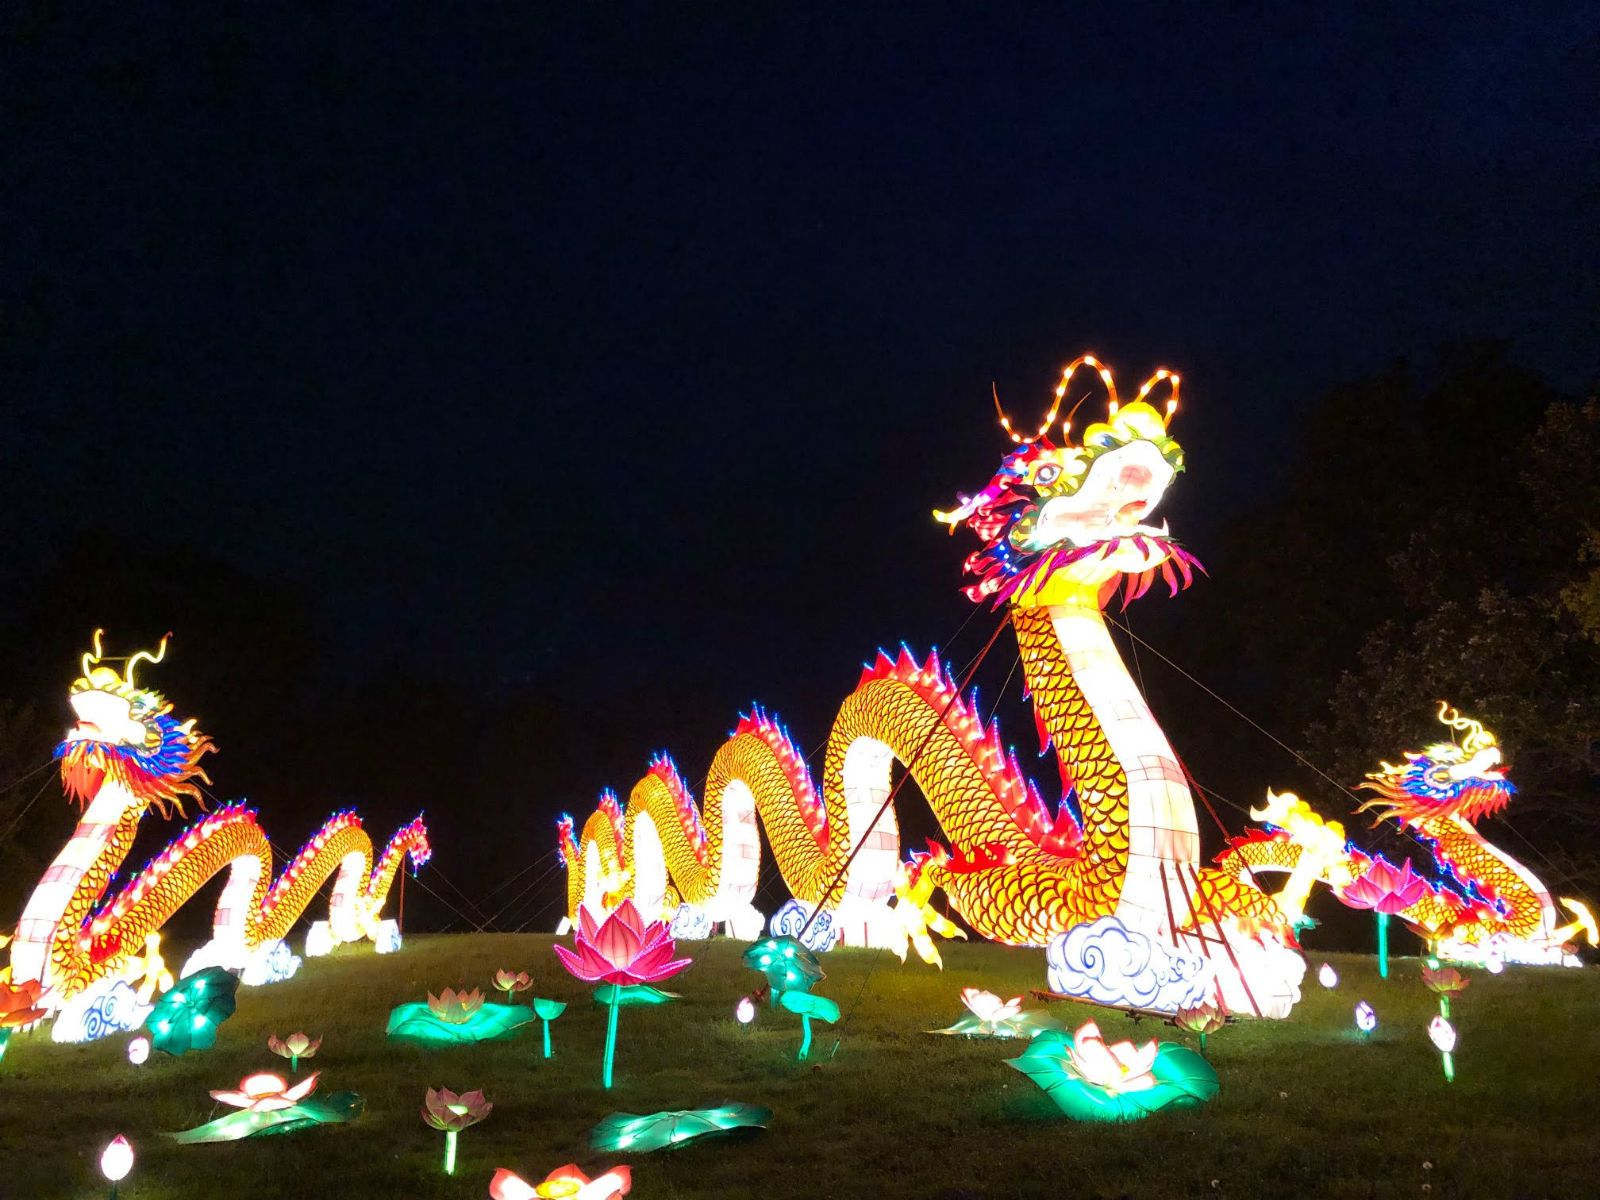 Lights returns to Botanical Gardens this year